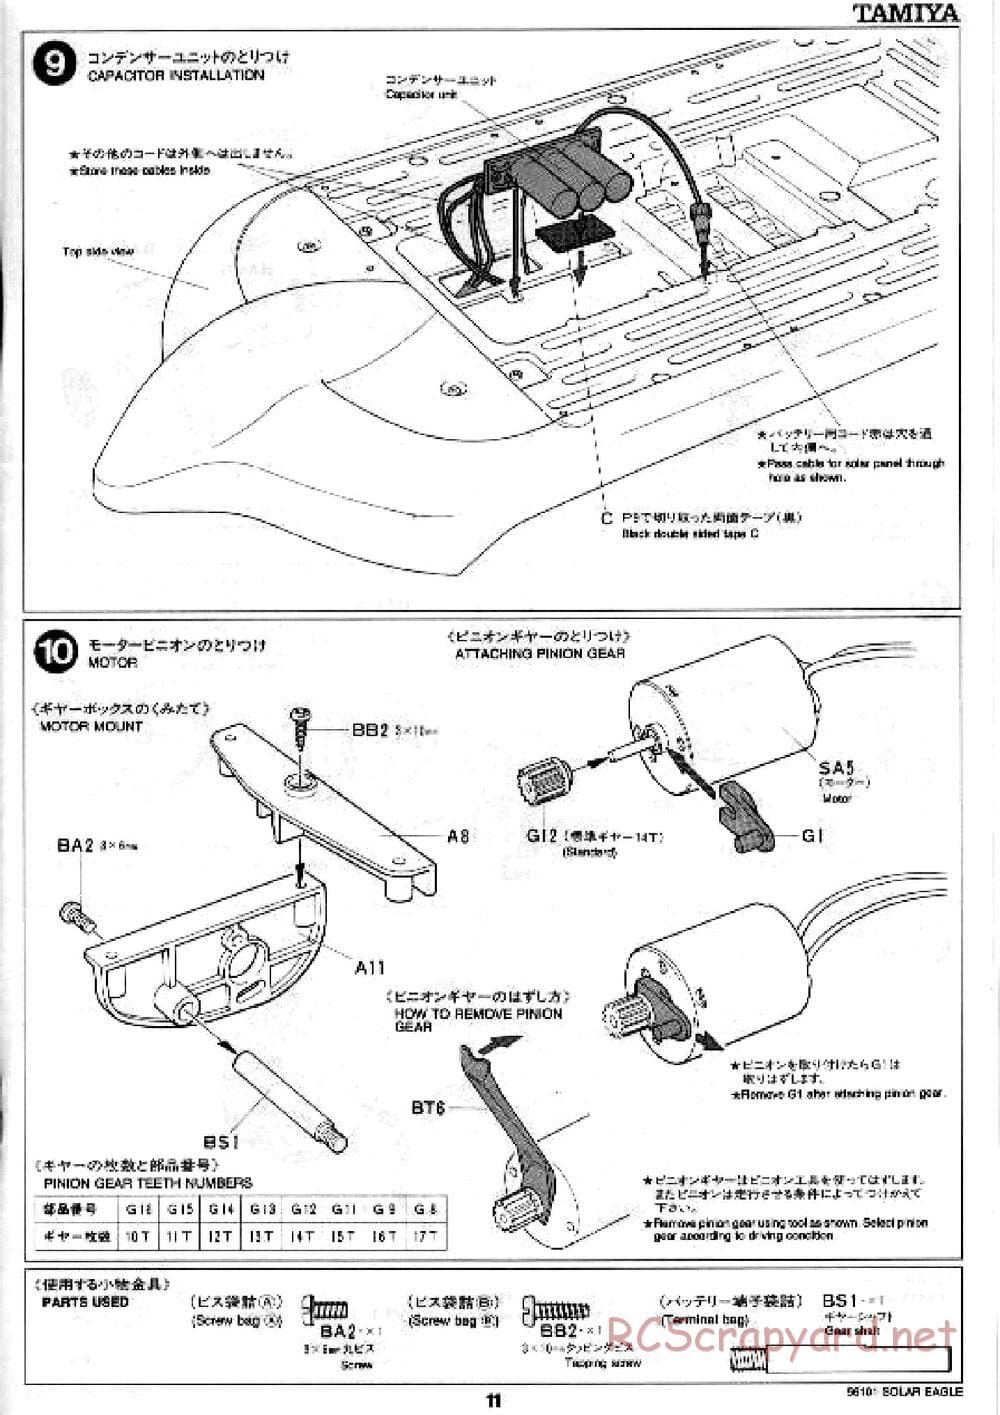 Tamiya - Solar Eagle SRC-6000 Chassis - Manual - Page 11